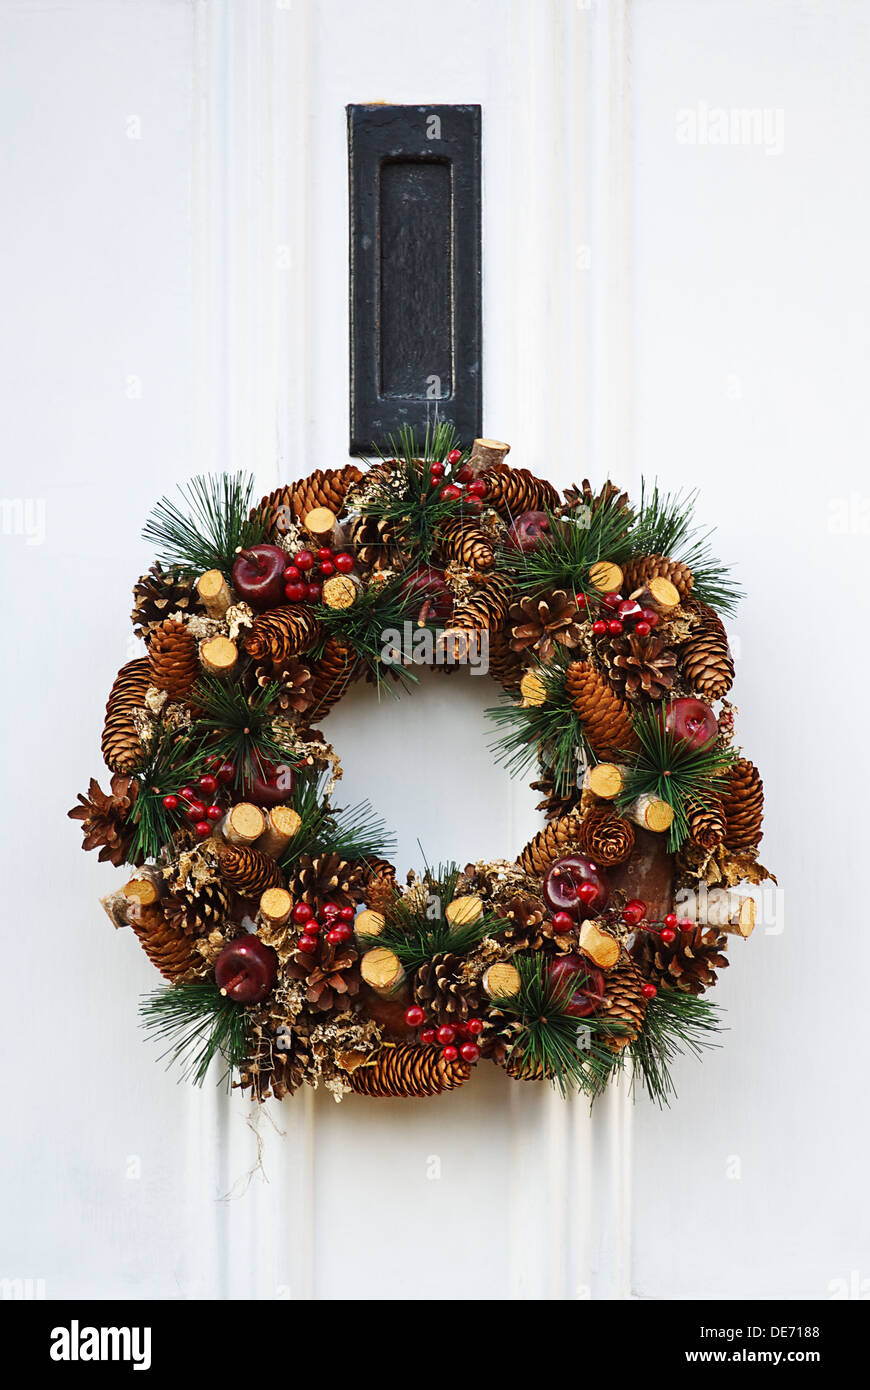 Festive Christmas wreath on white door at xmas Stock Photo